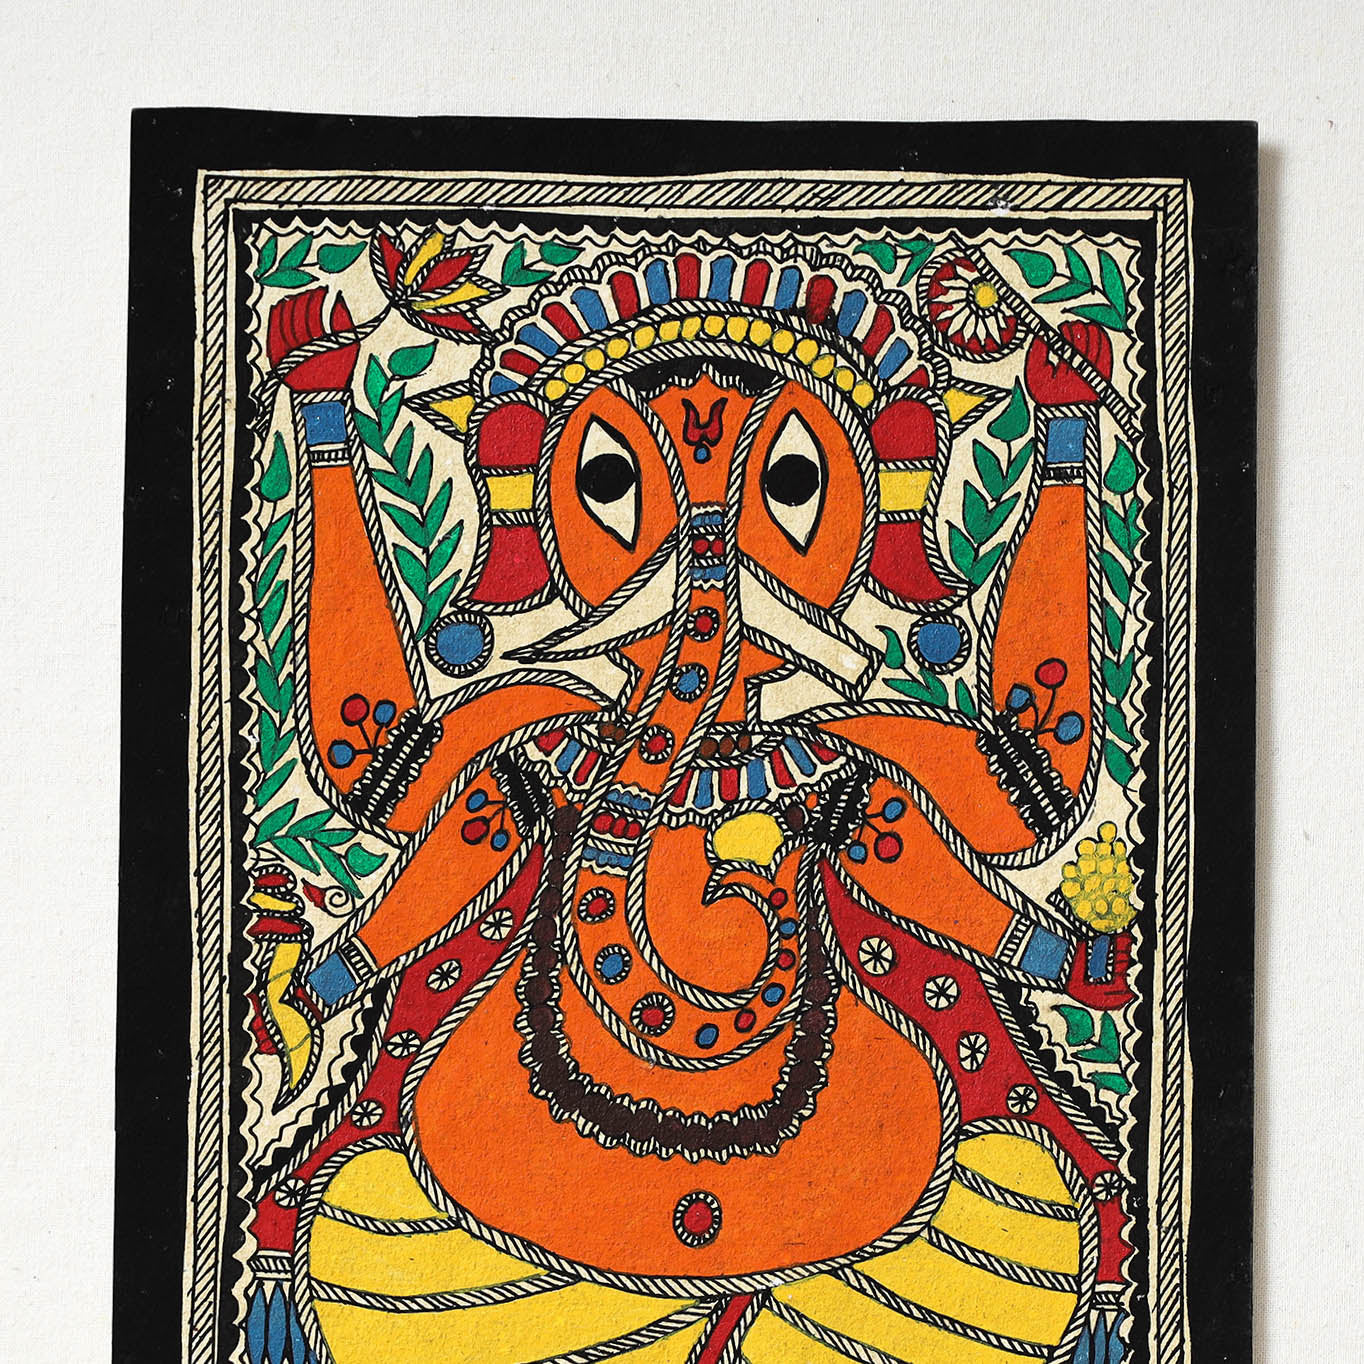 Handpainted Madhubani Painting by Hira Devi (11 x 7.5)